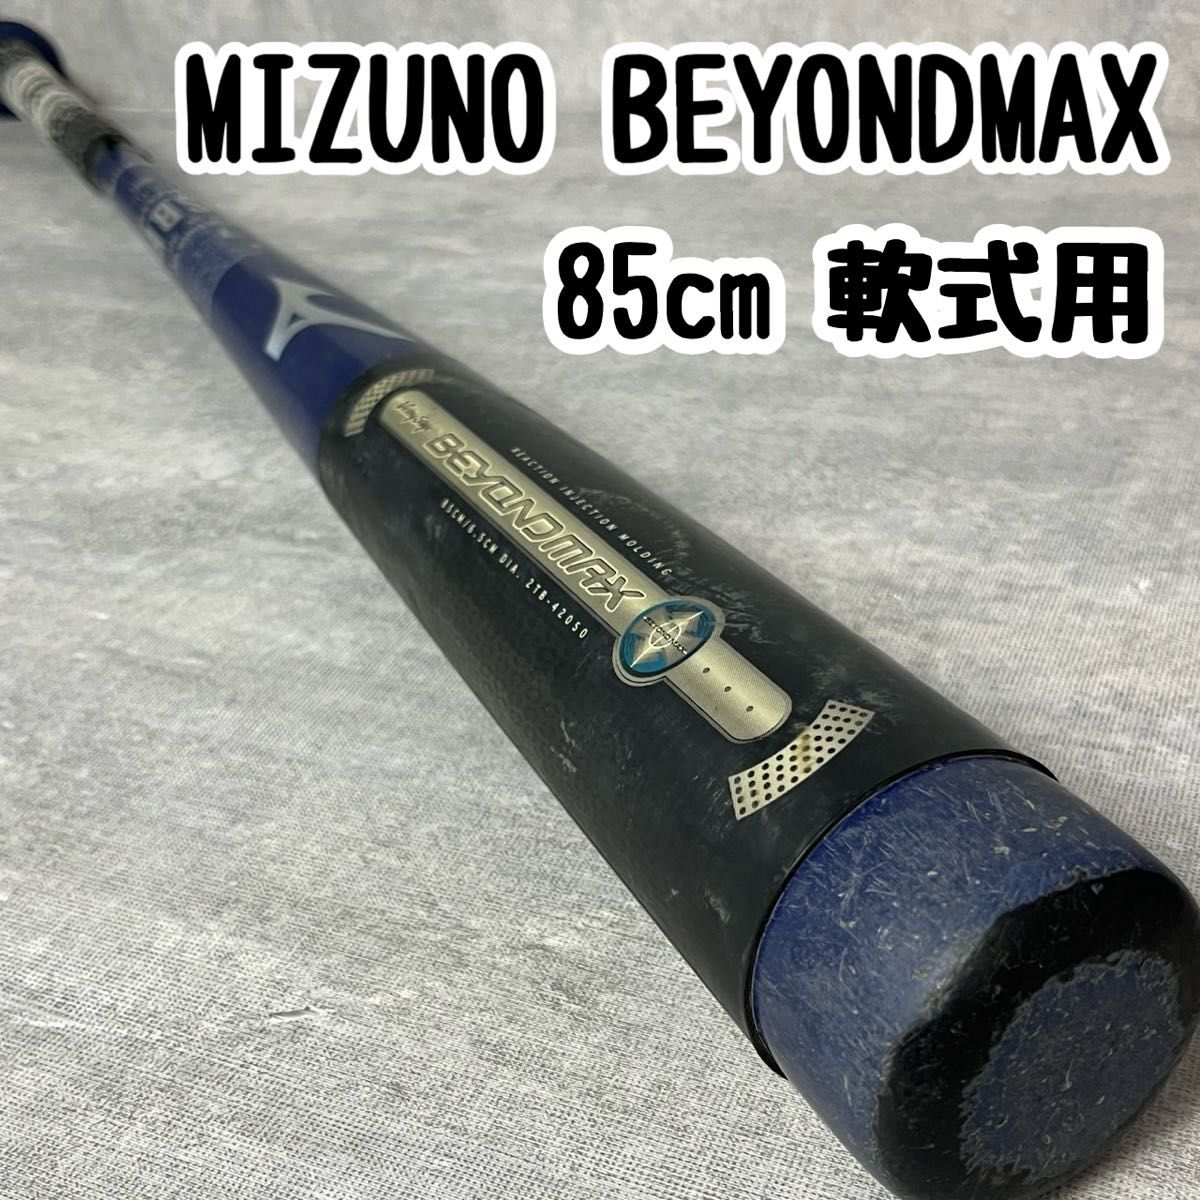 MIZUNO ミズノ BEYONDMAX ビヨントマックス 85cm 軟式用 野球 金属 バット